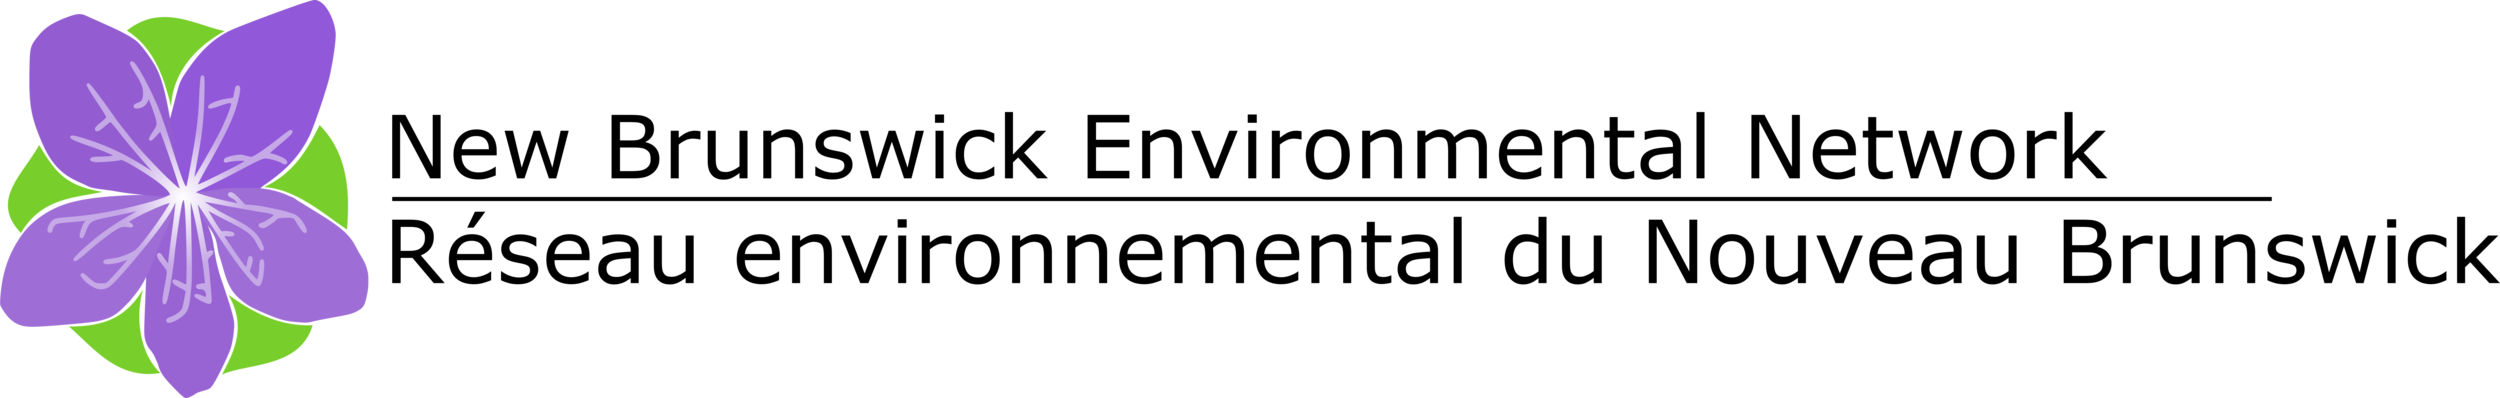 New Brunswick Environmental Network